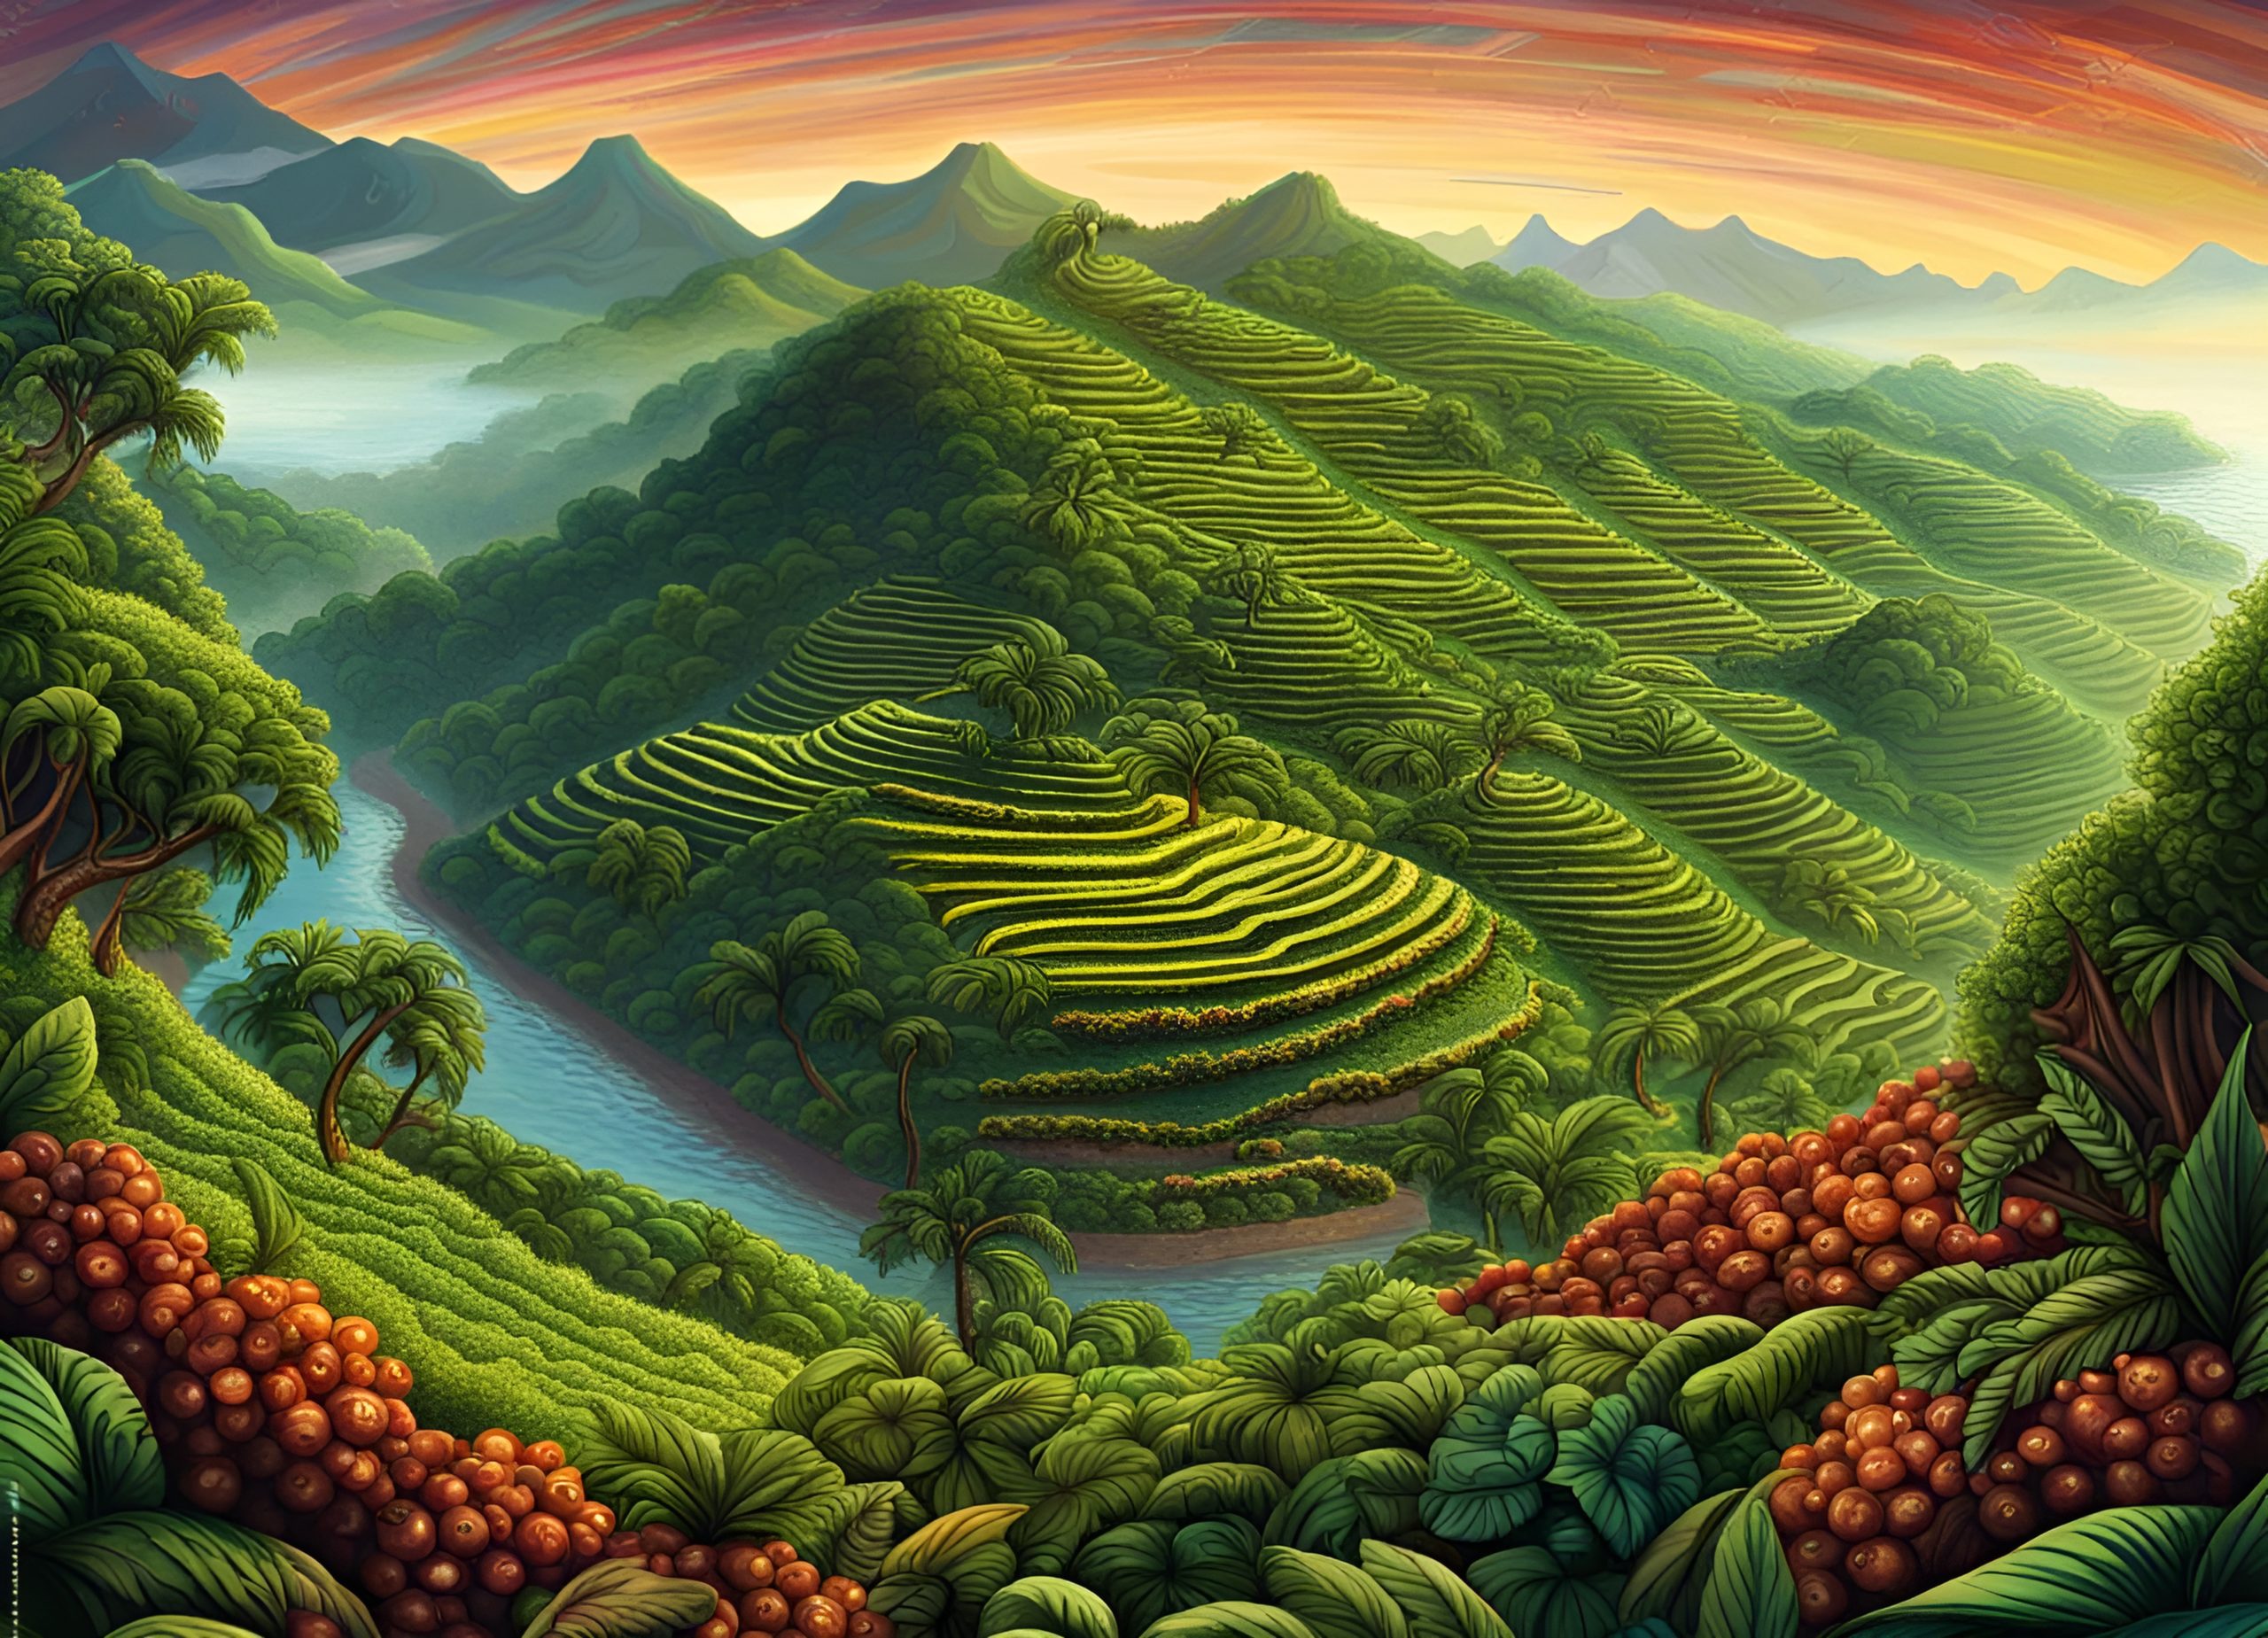 Java island with coffee plantations on mountain hills.